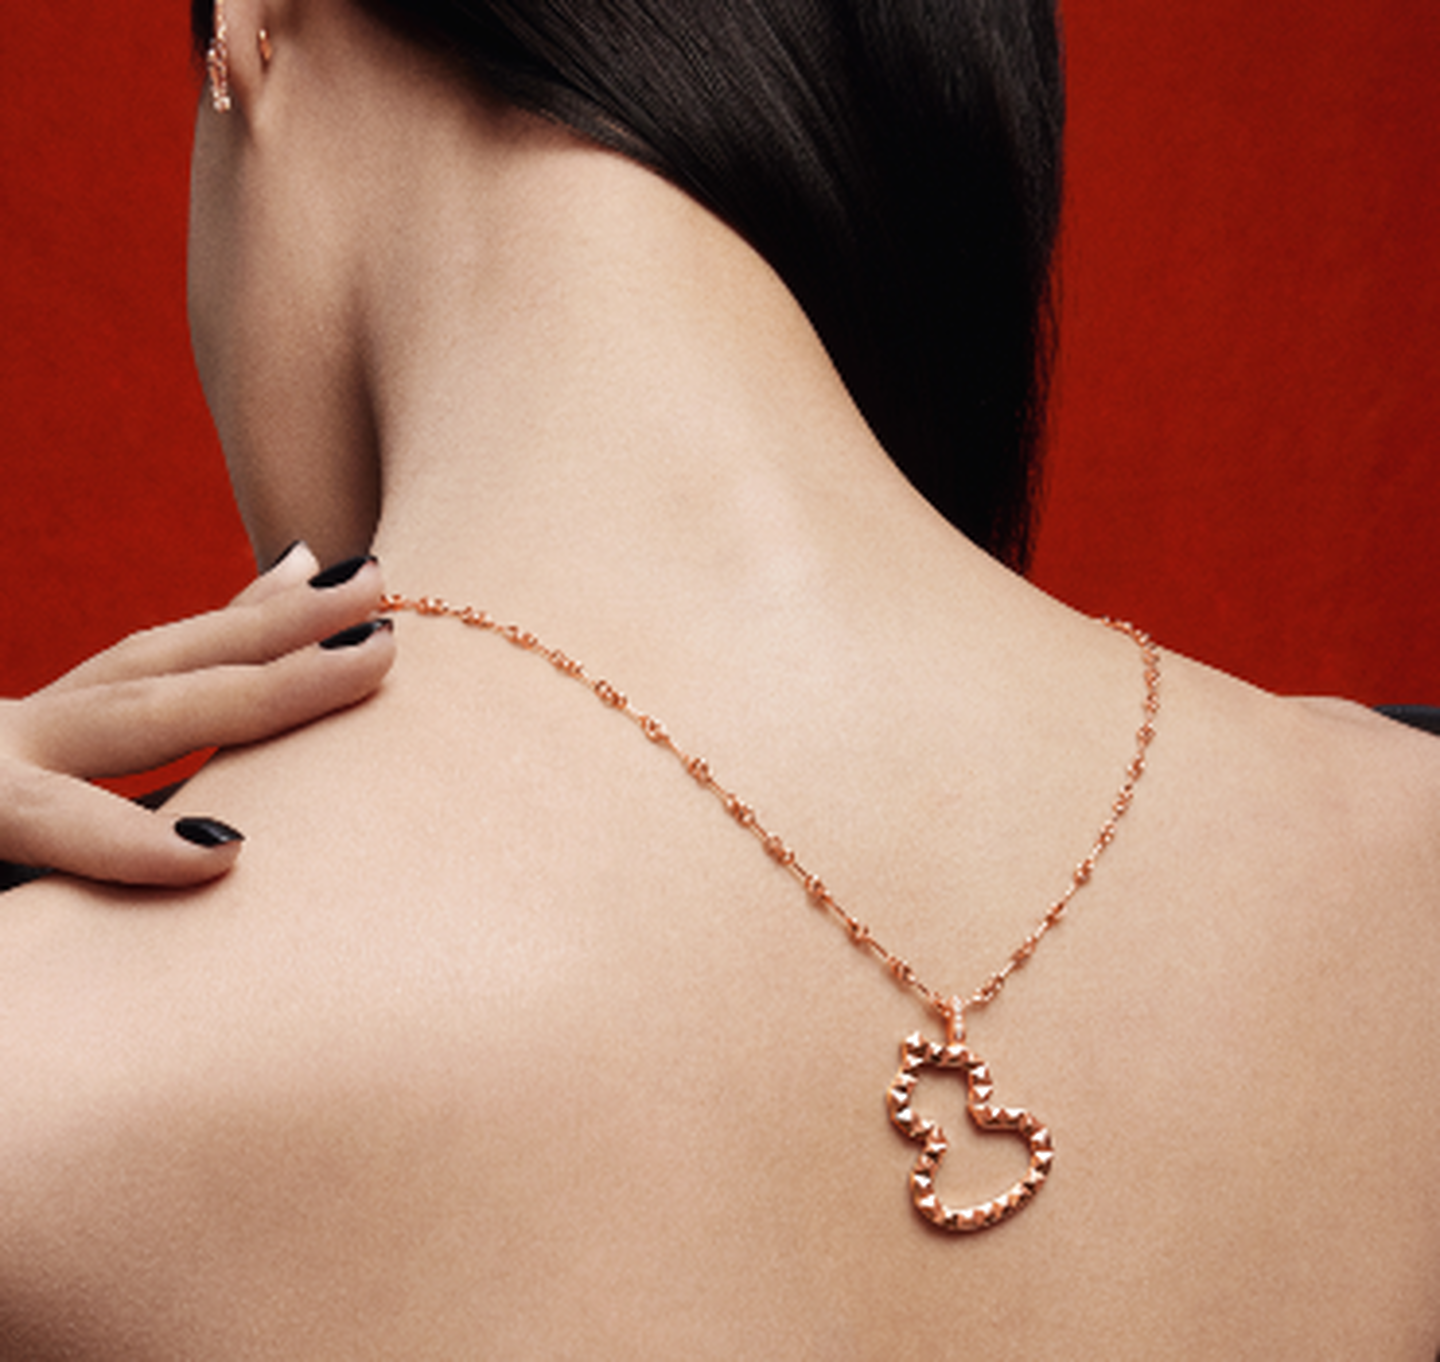 A Qeelin Wulu rose gold and diamond pendant on a woman's back.